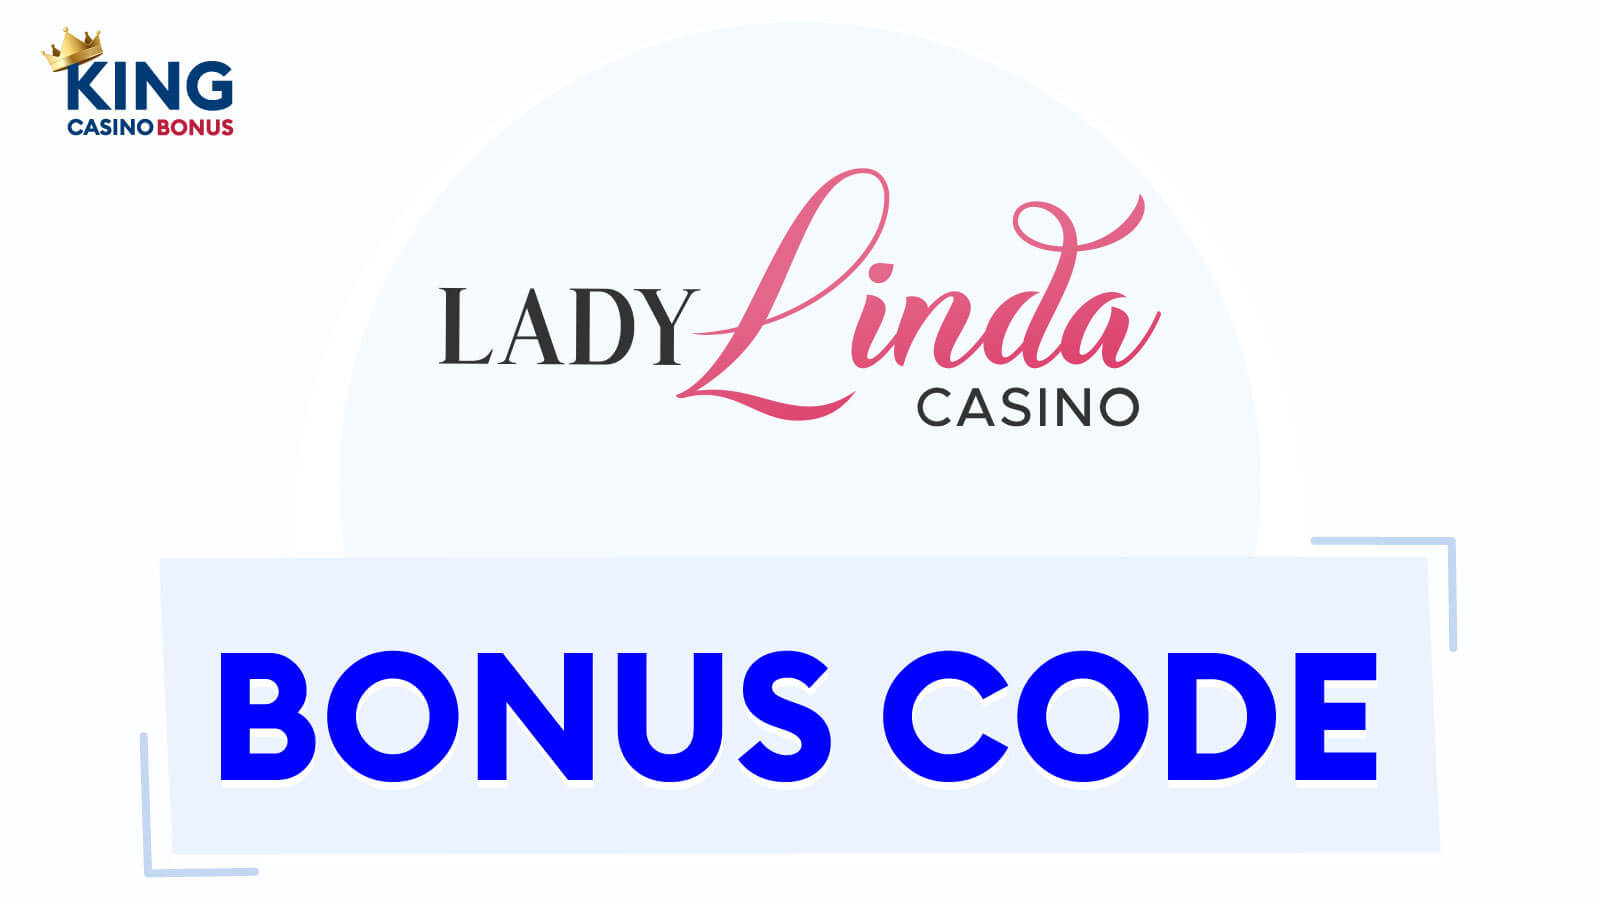 Lady Linda Casino Bonuses